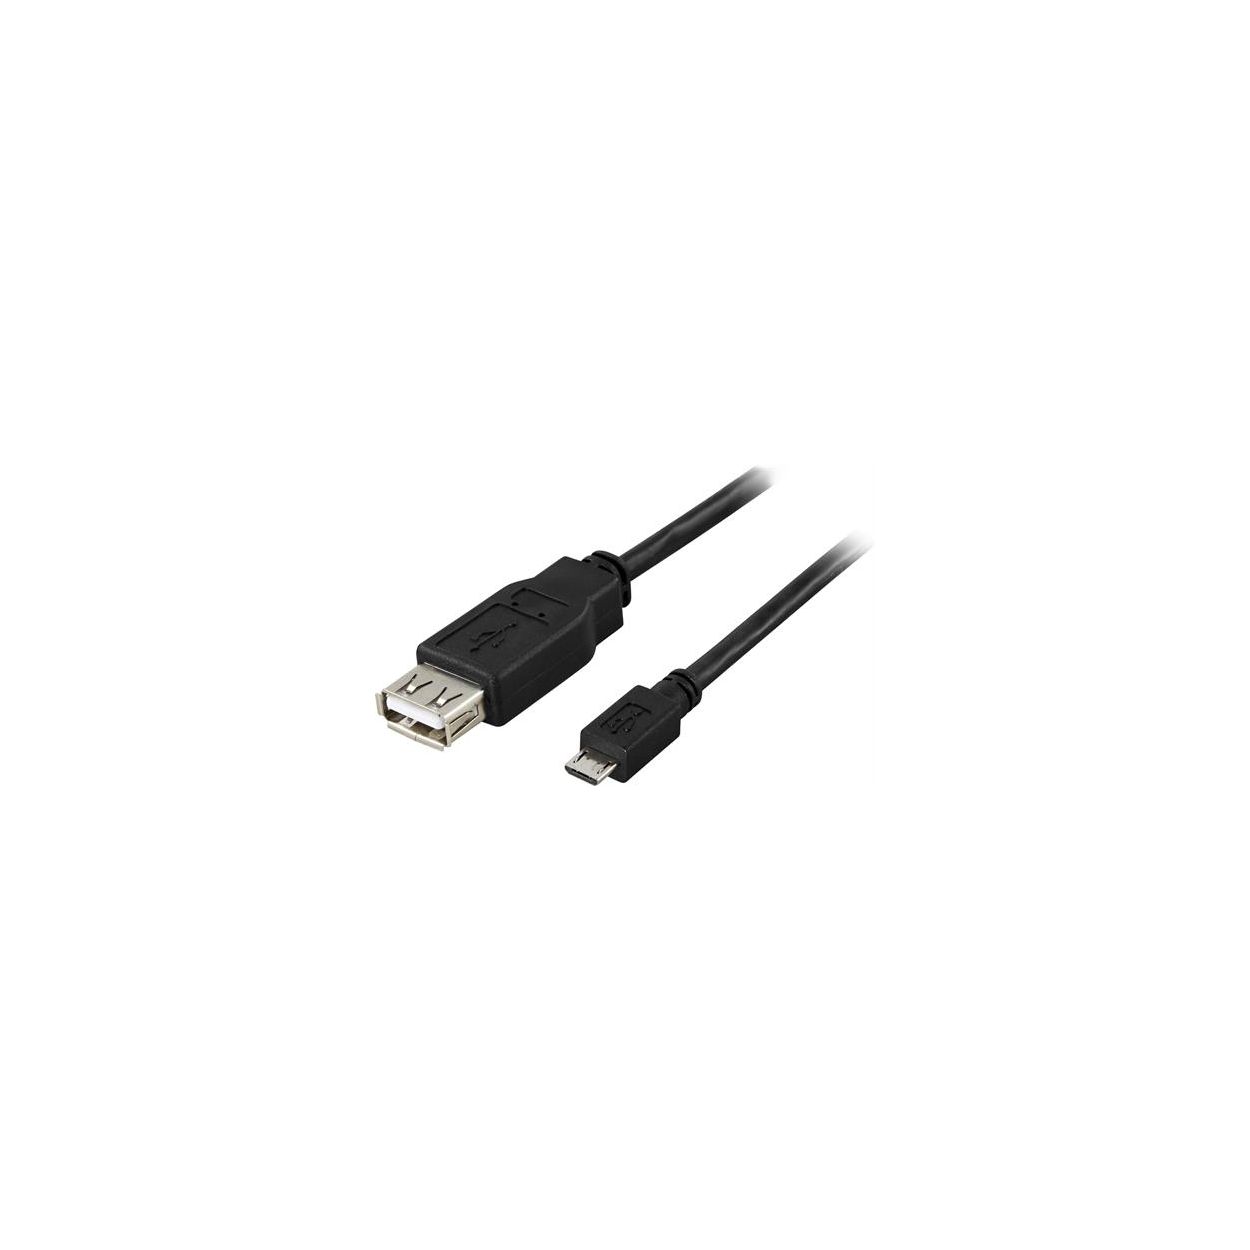 USB-A till USB-B kabel 2m (svart) - USB-kablar 